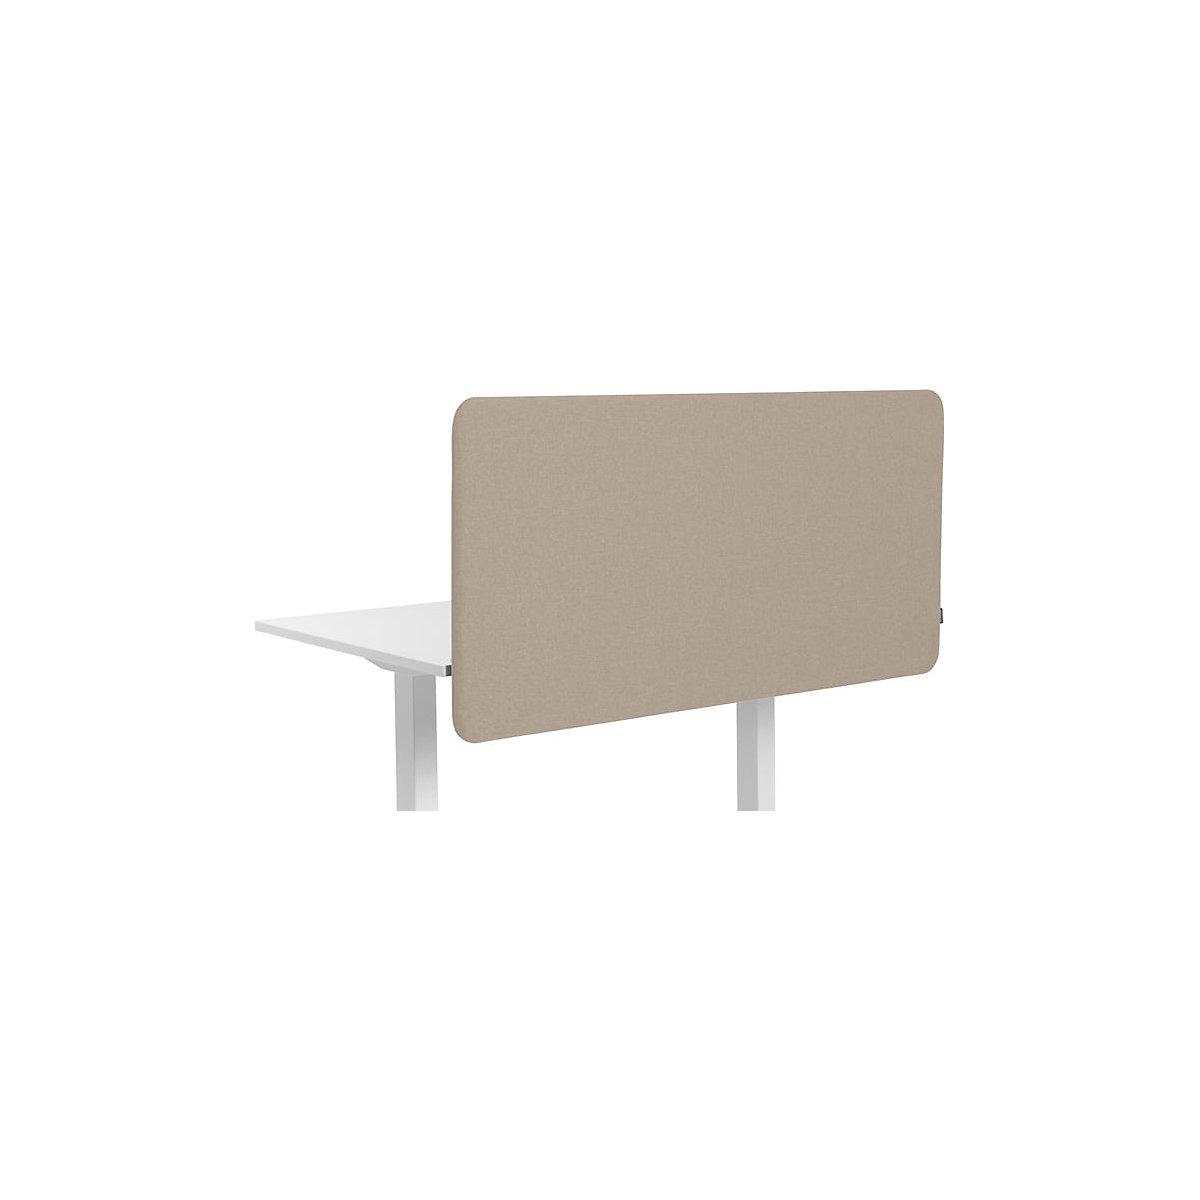 Softline Salsa acoustic desk partition, suspended downwards, HxW 650 x 600 mm, fabric, beige-3